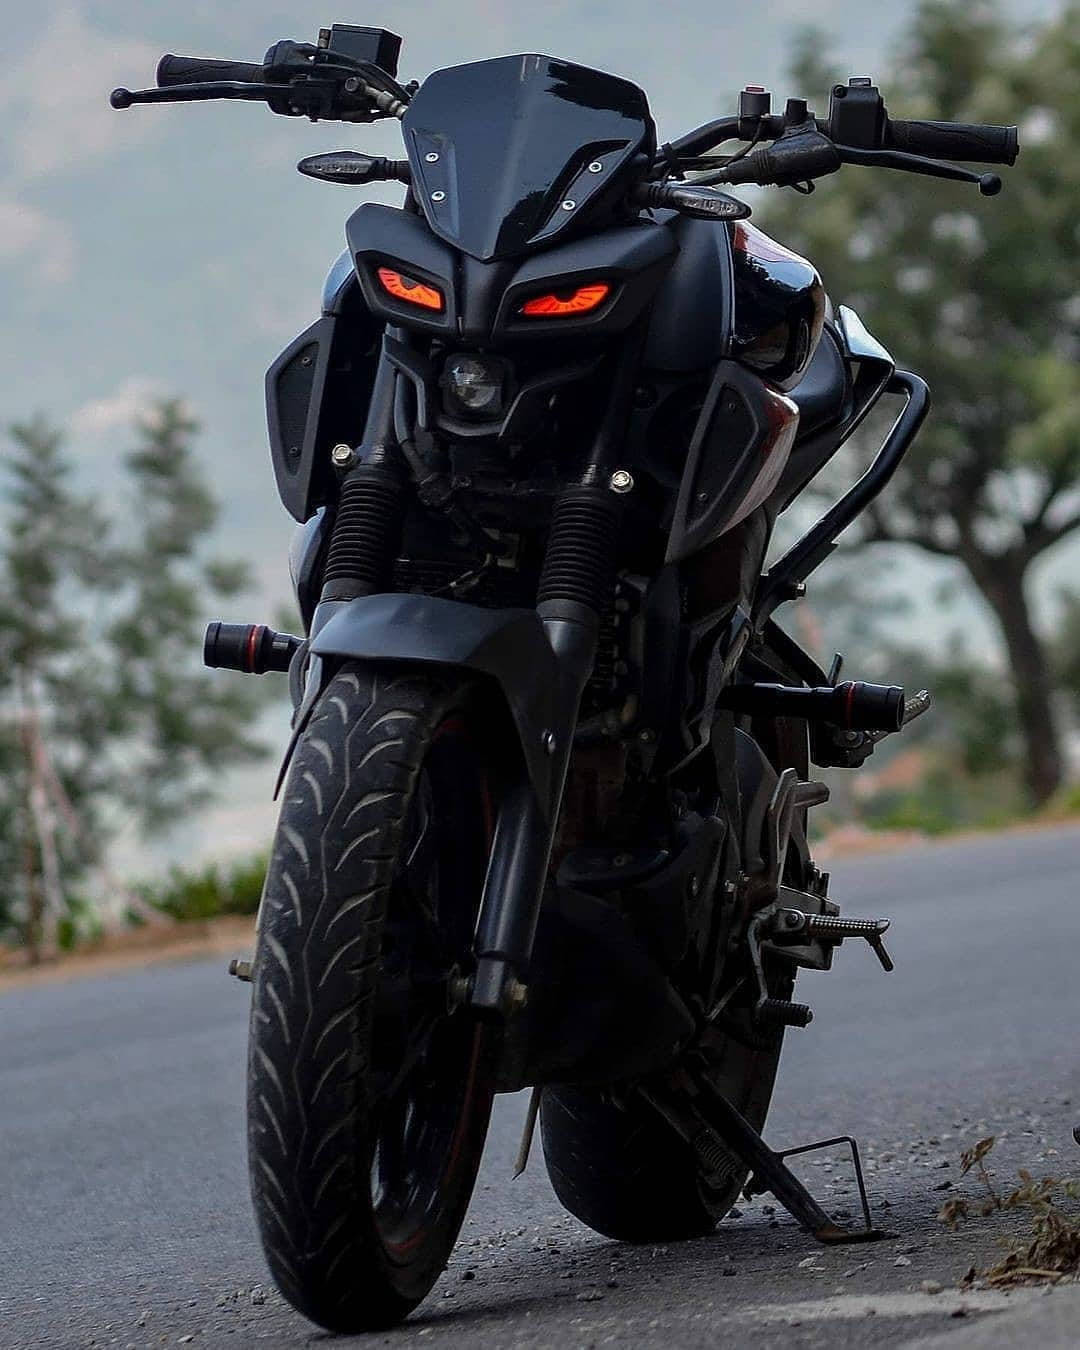 Sleek Yamaha Mt 15 Motorcycle In Action Wallpaper